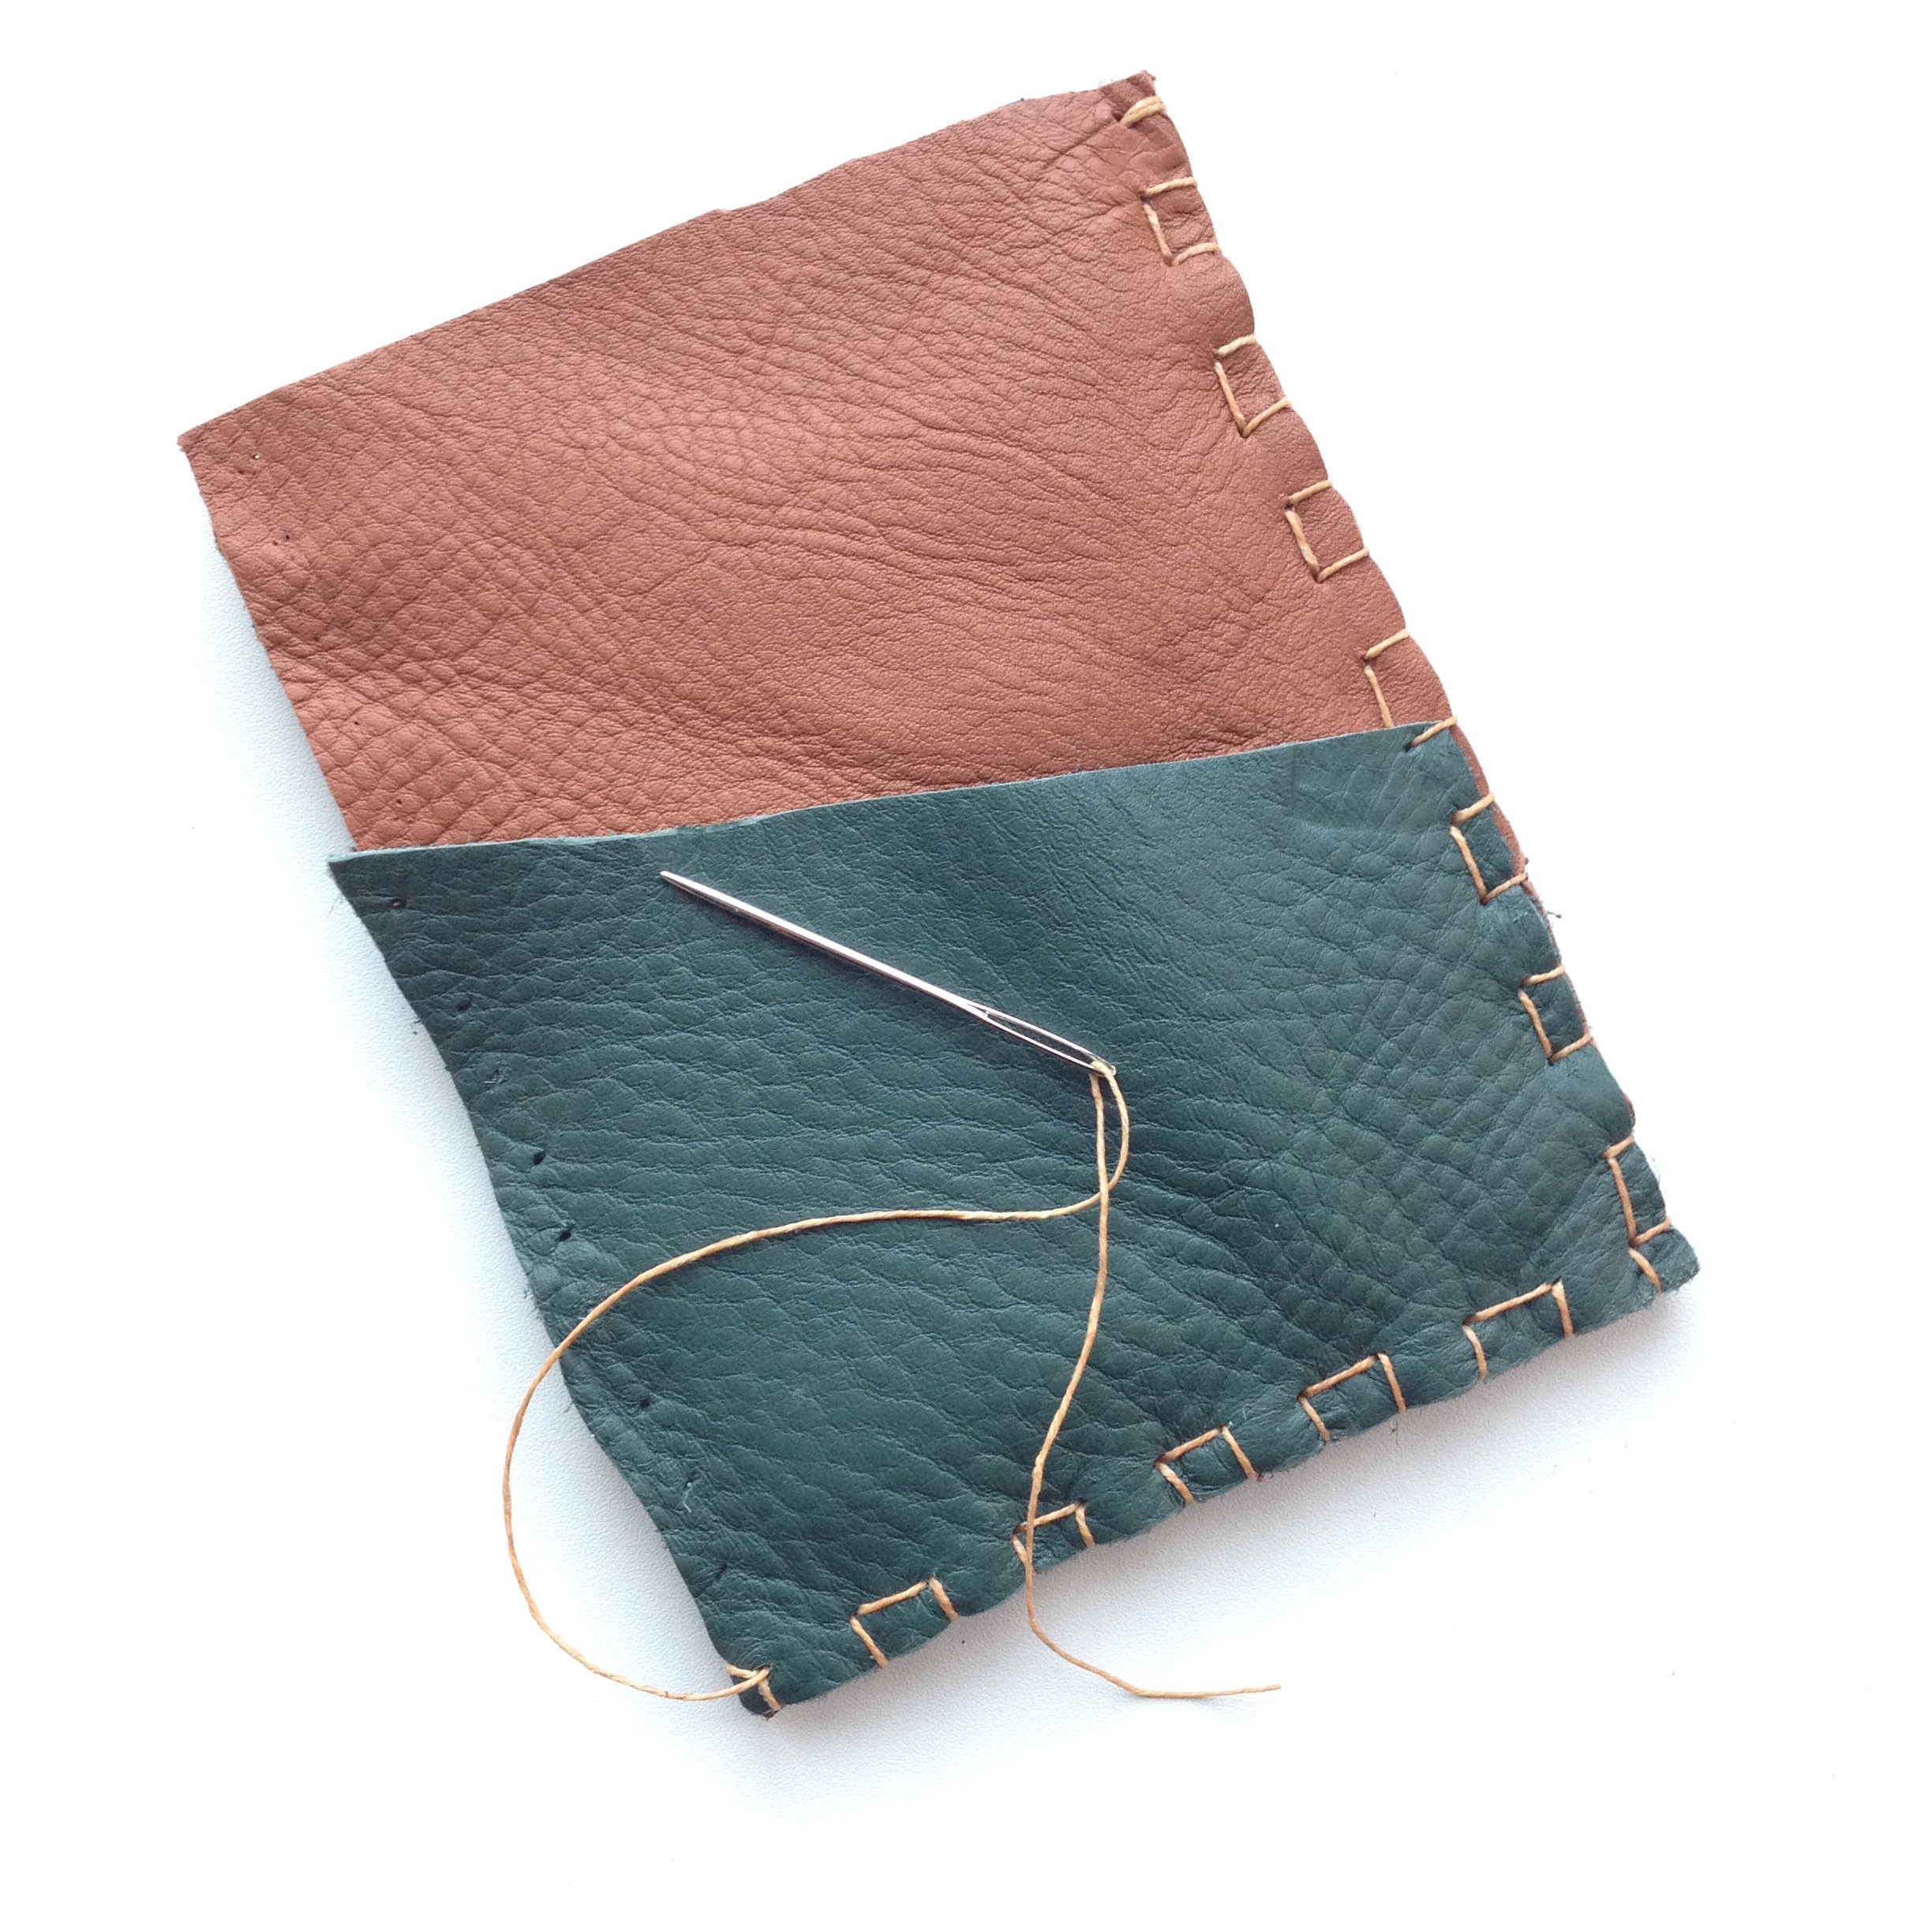 Leather Crafting DIY - Passport Case - FREE PATTERN 